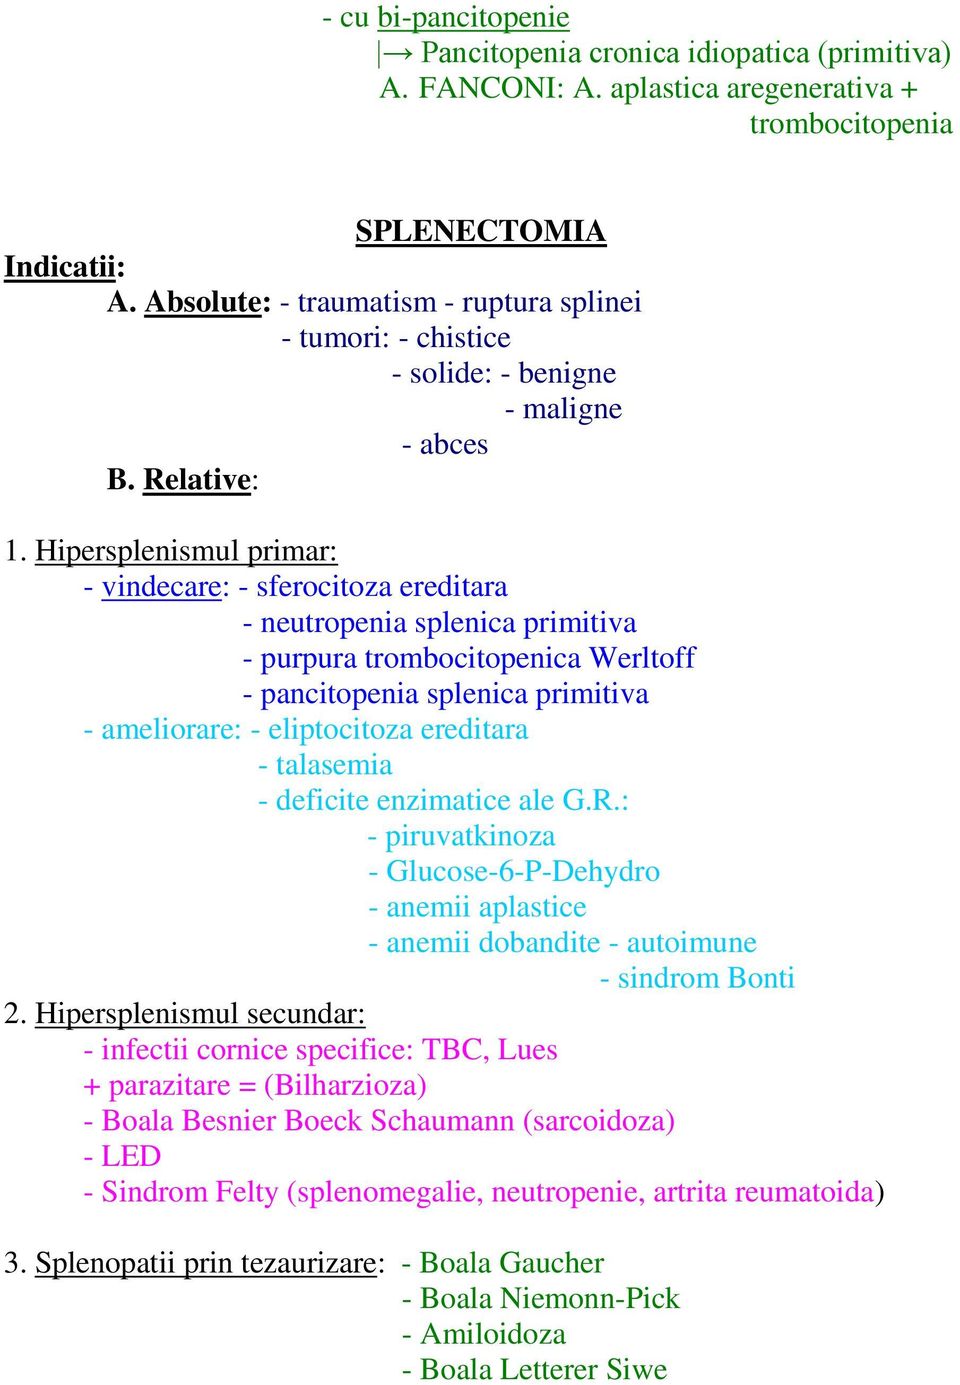 Hipersplenismul primar: - vindecare: - sferocitoza ereditara - neutropenia splenica primitiva - purpura trombocitopenica Werltoff - pancitopenia splenica primitiva - ameliorare: - eliptocitoza